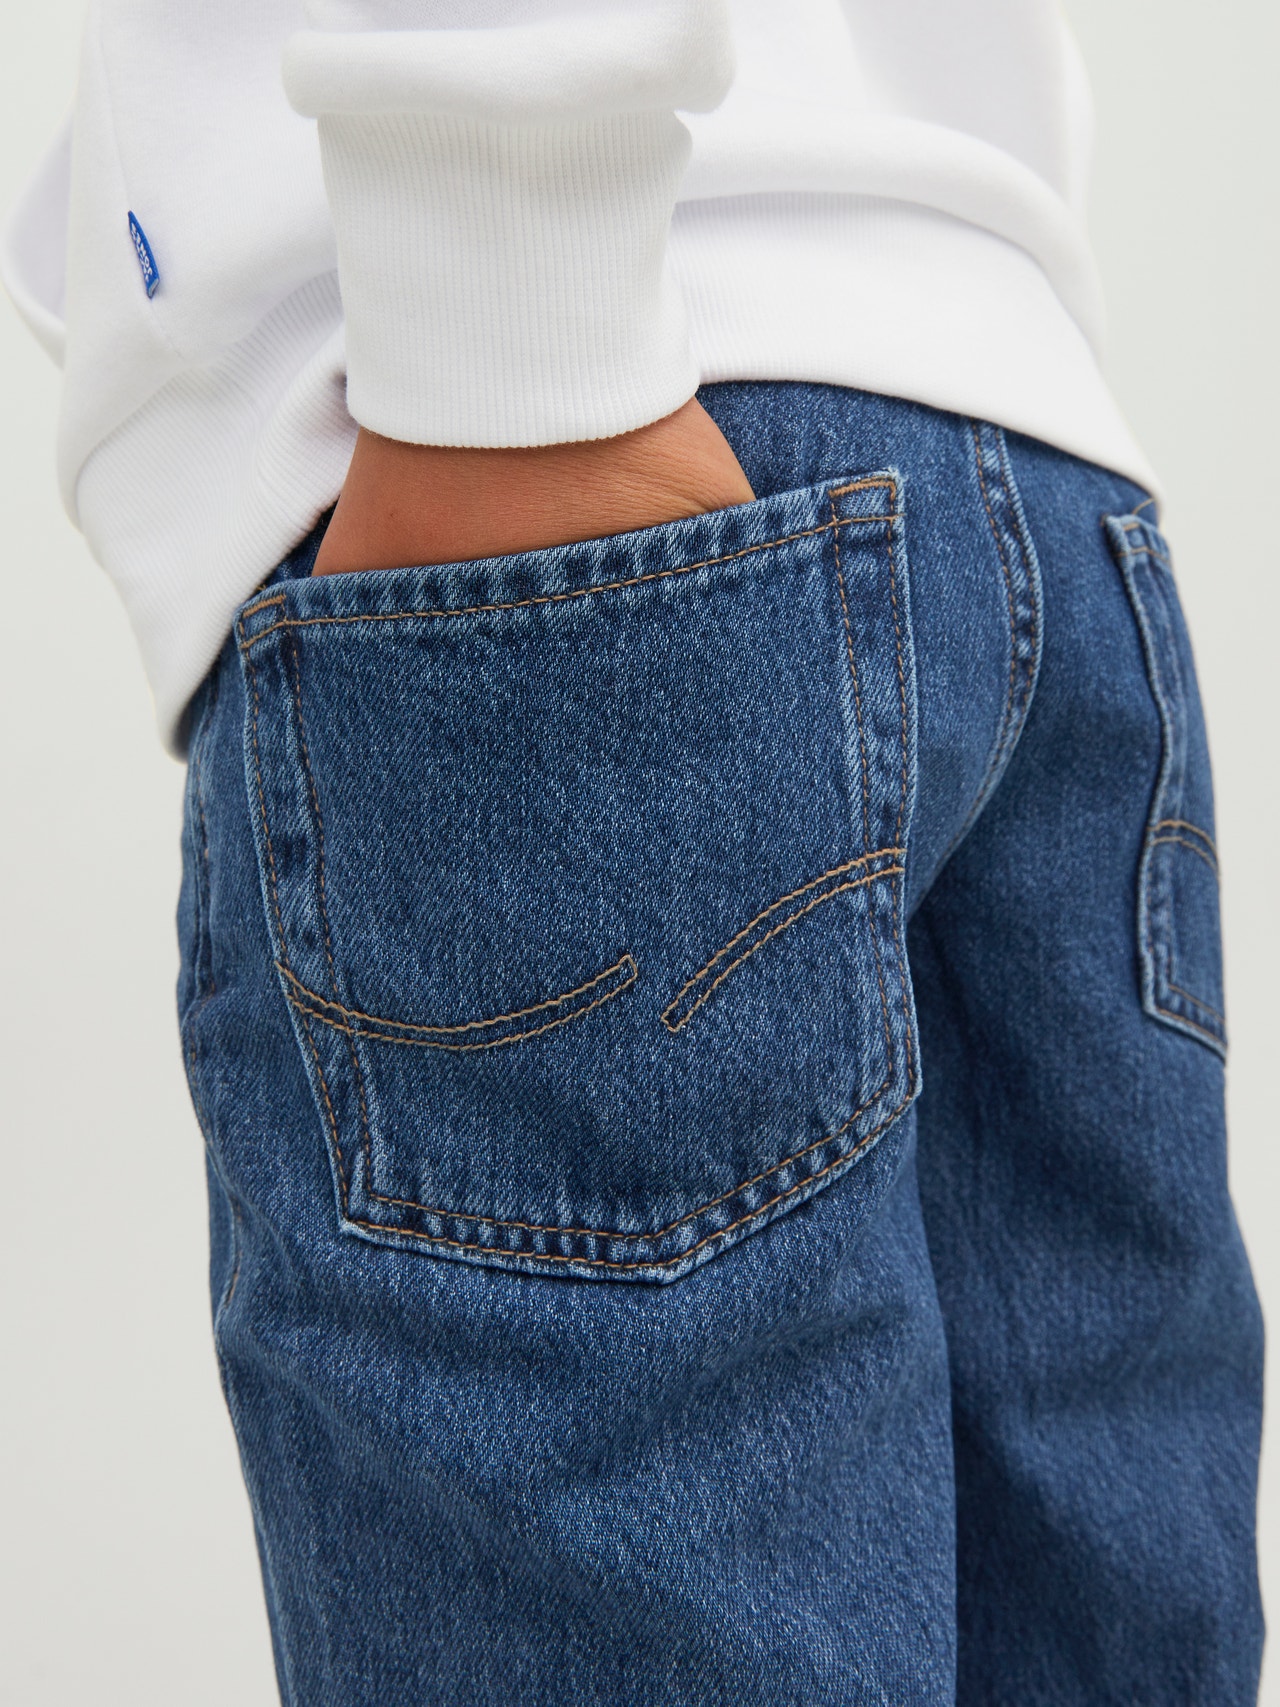 Jack & Jones JJICLARK JJORIGINAL MF 723 Regular fit jeans For boys -Blue Denim - 12213526